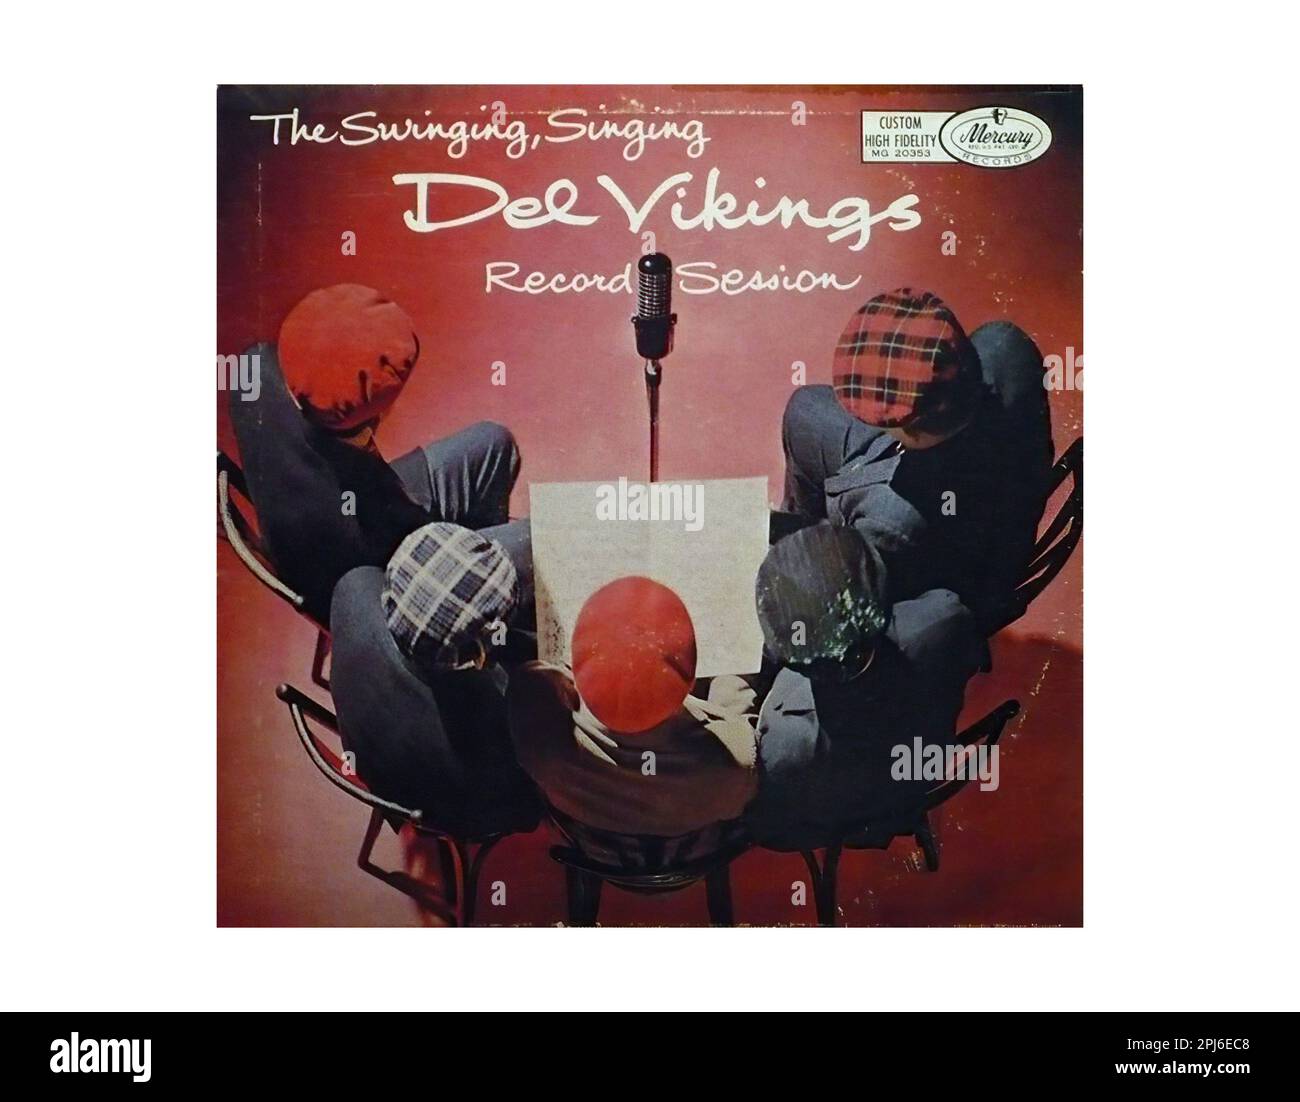 Del Vikings 1959 - Vintage U.S. Music Vinyl Record Stock Photo